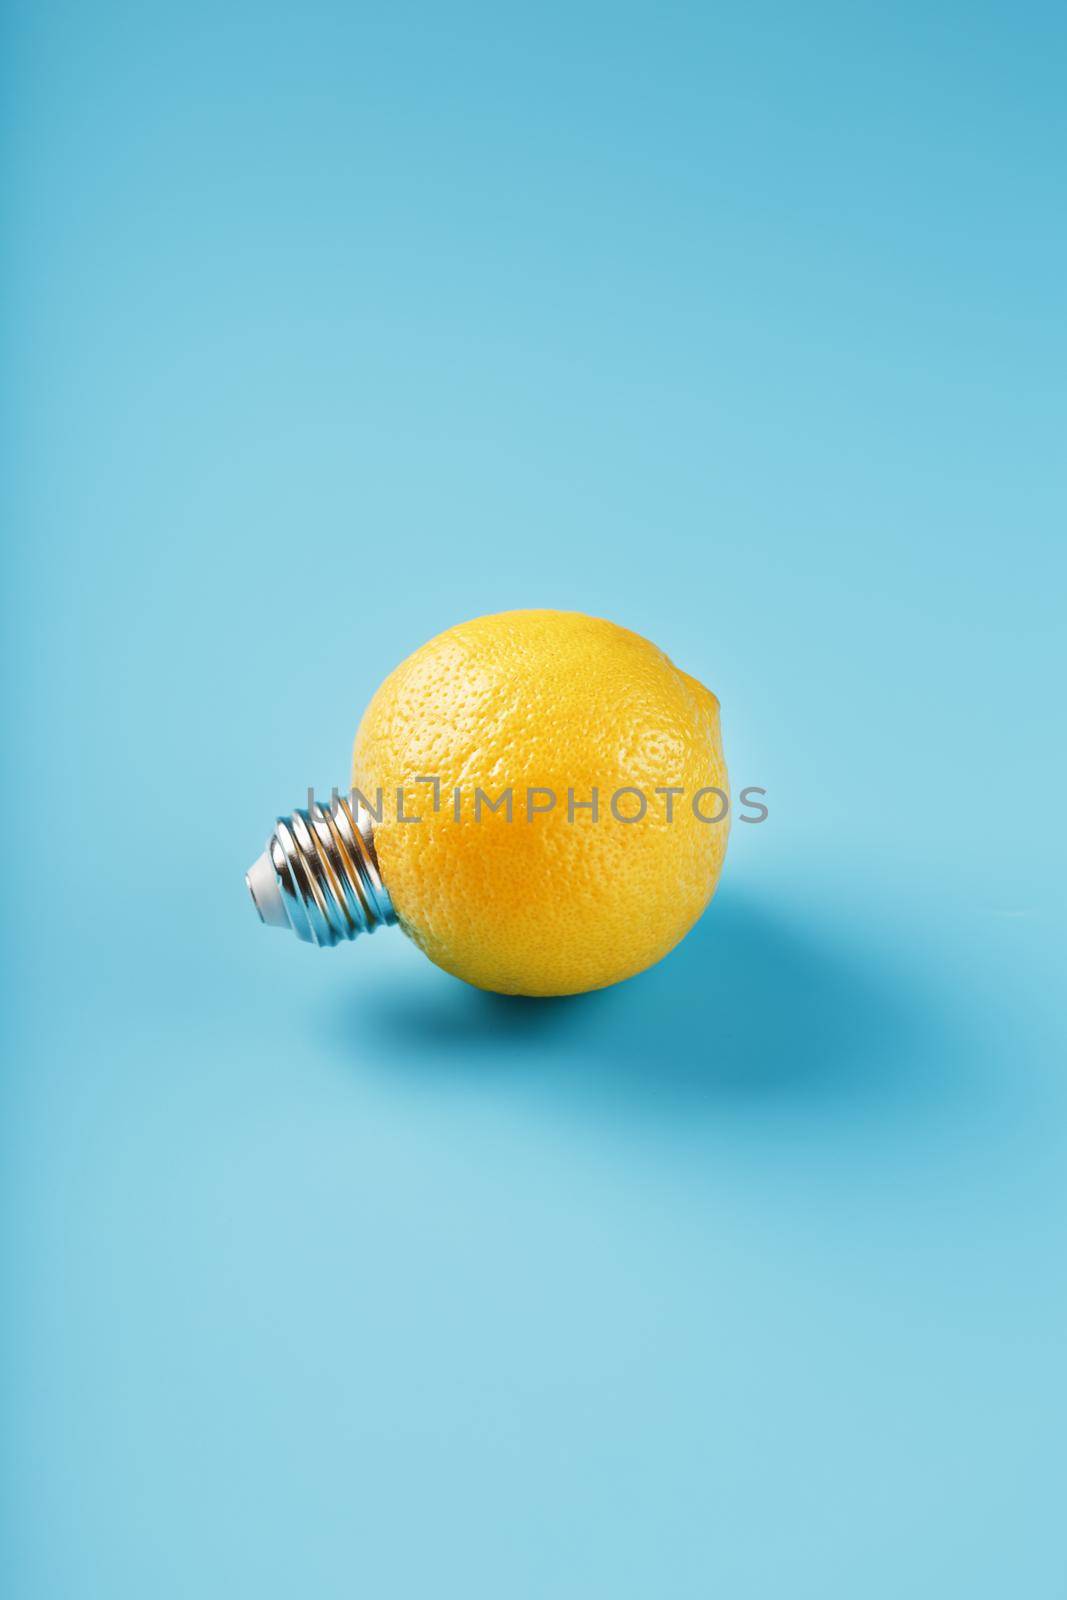 The light bulb is like a lemon on a blue background. Lemon fruit with a light bulb cartridge. Concept of an idea